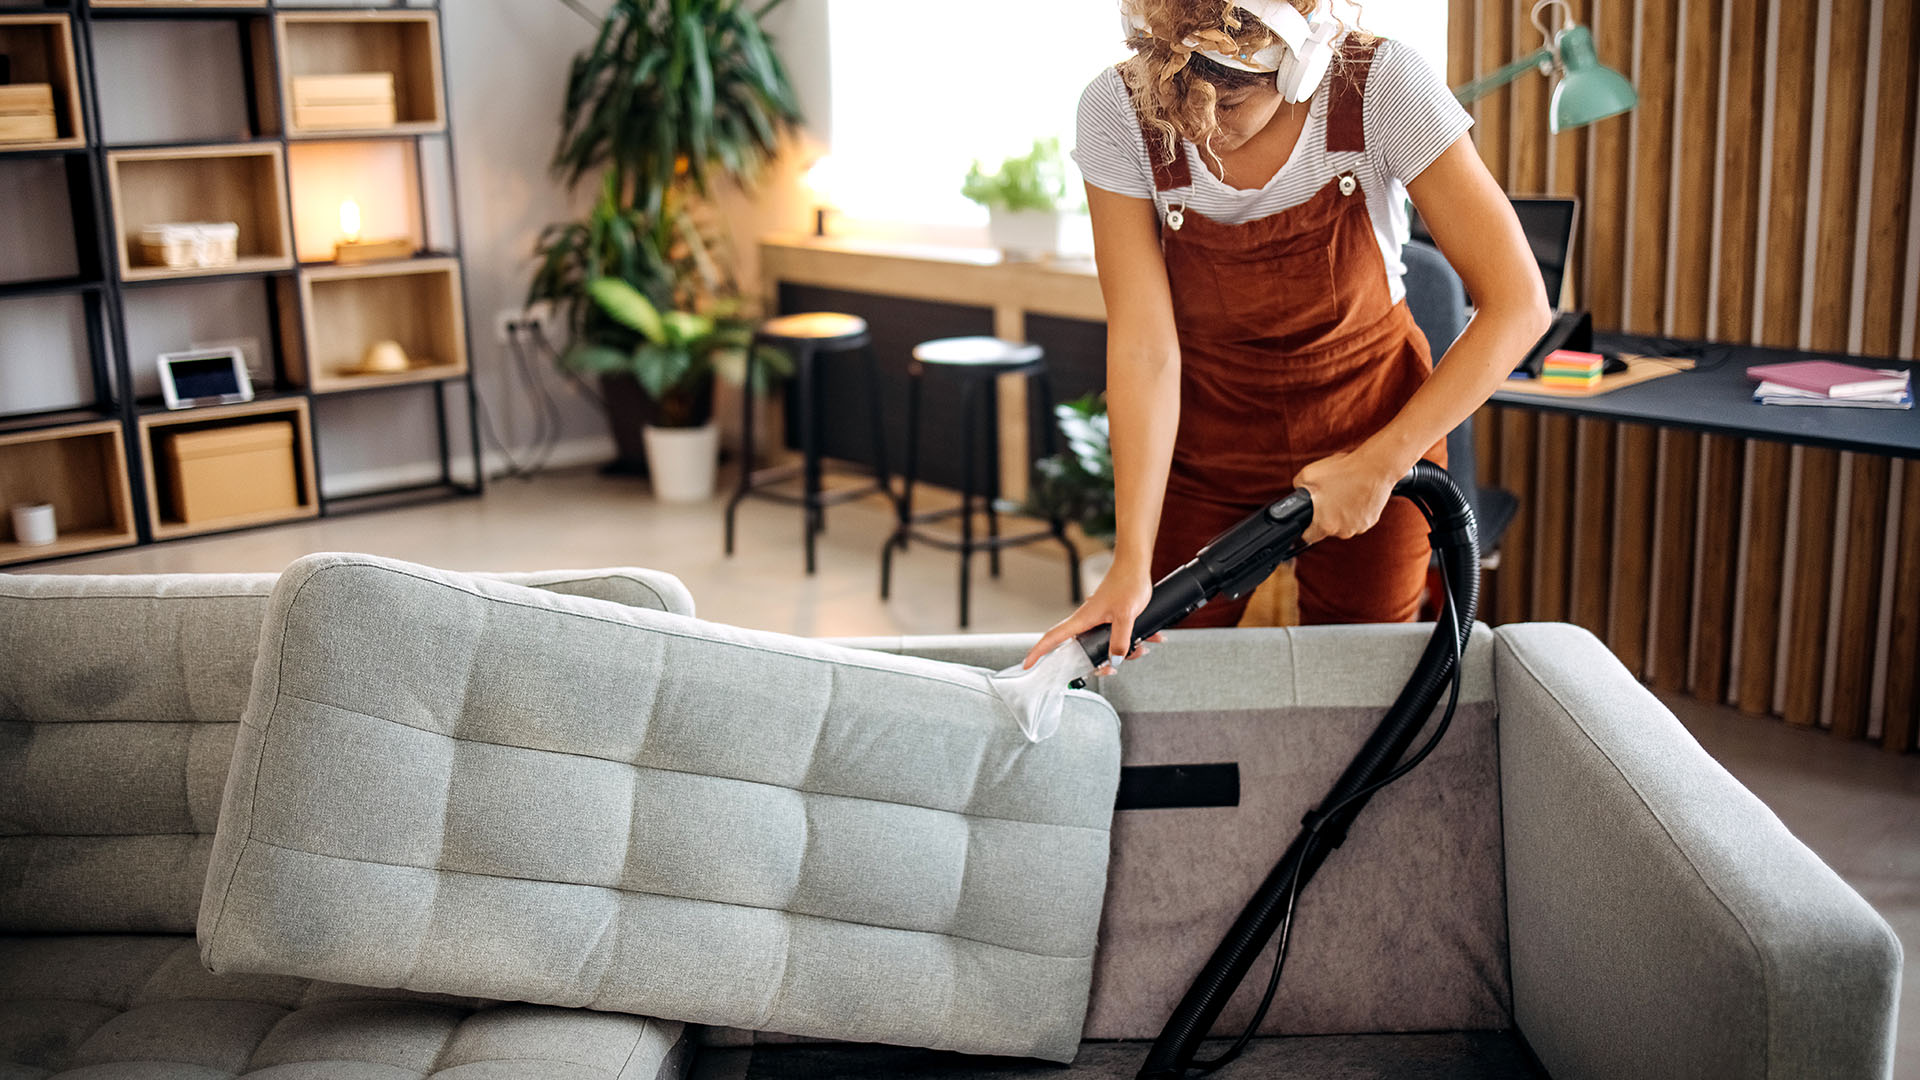 Woman vacuuming under her sofa cushions